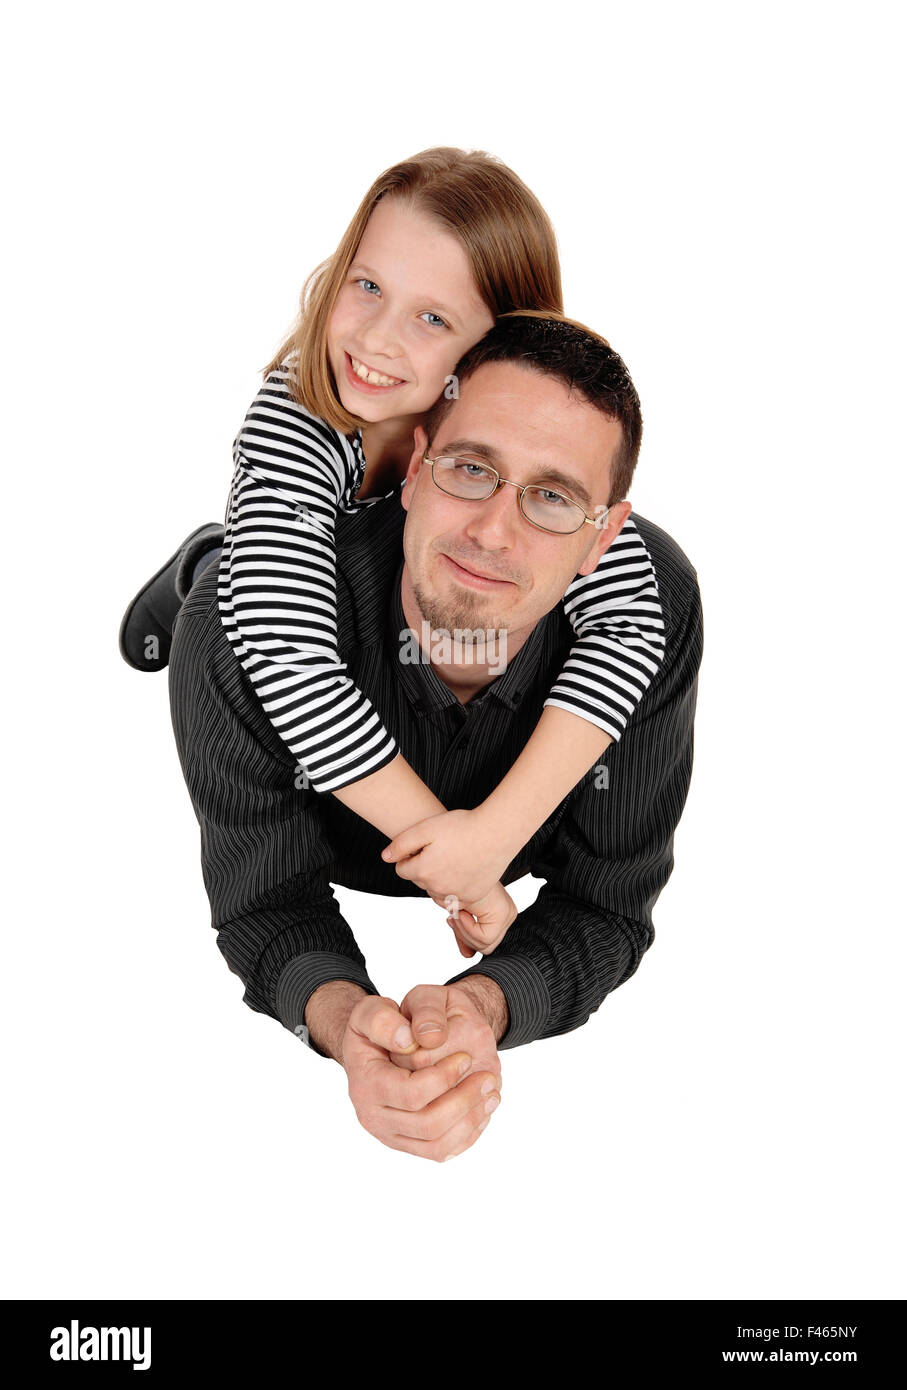 Daughter piggyback on dad. Stock Photo